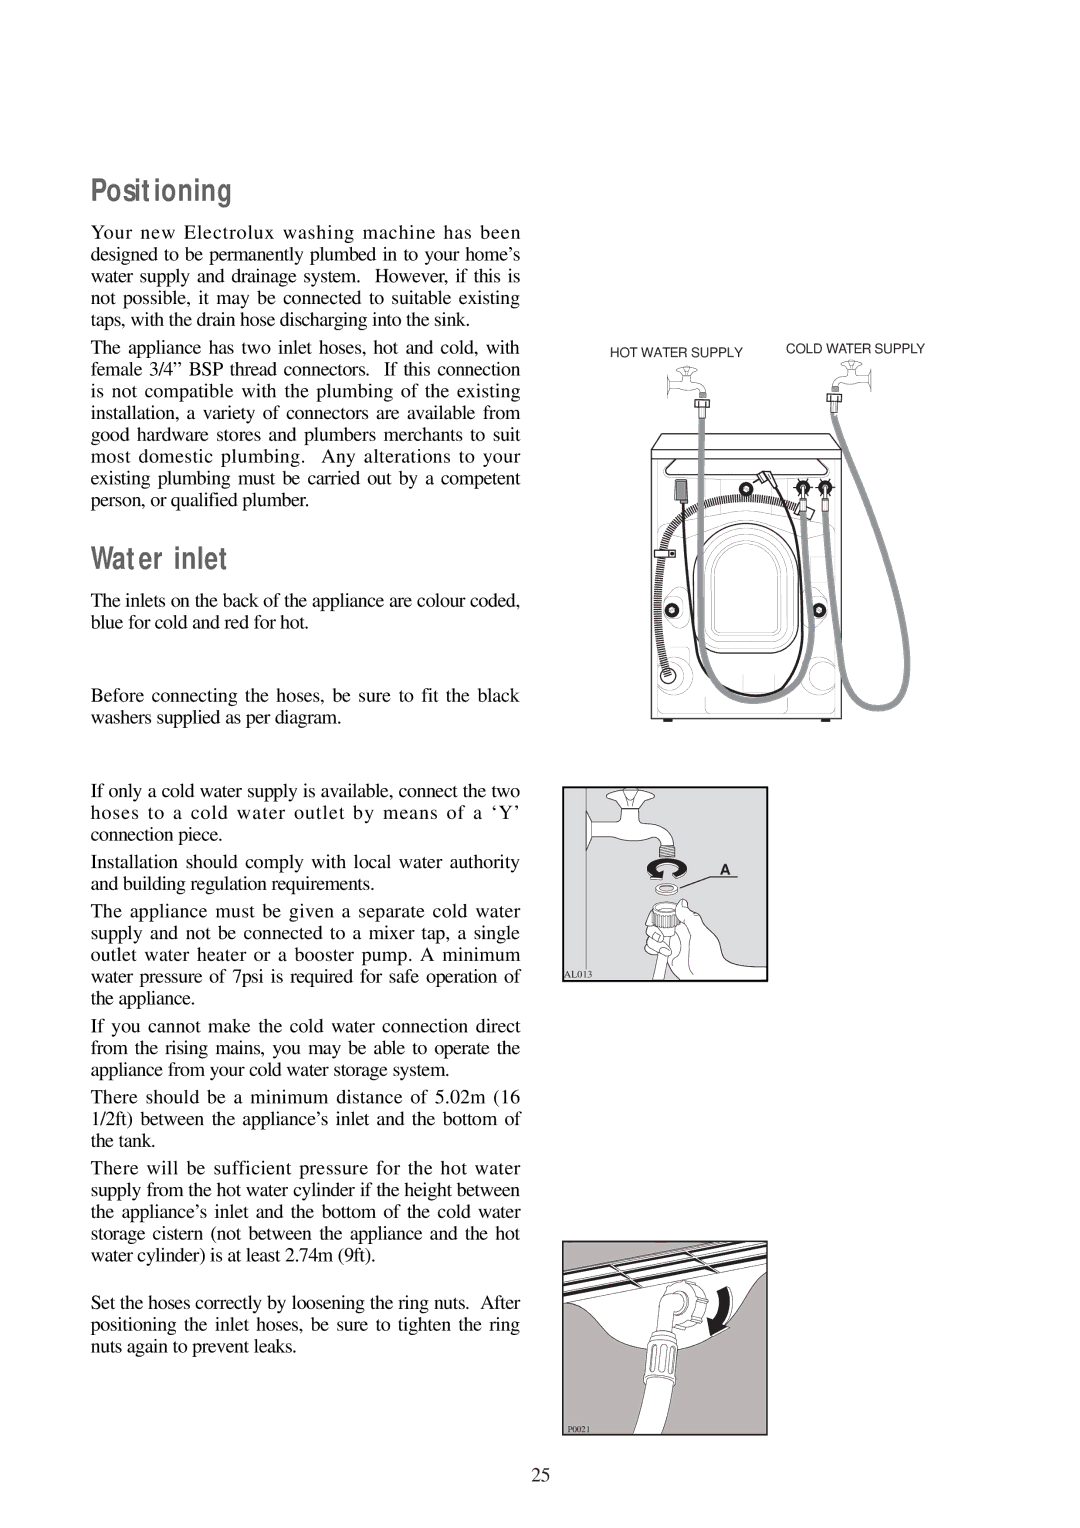 Electrolux WM 100 B manual Positioning, Water inlet 